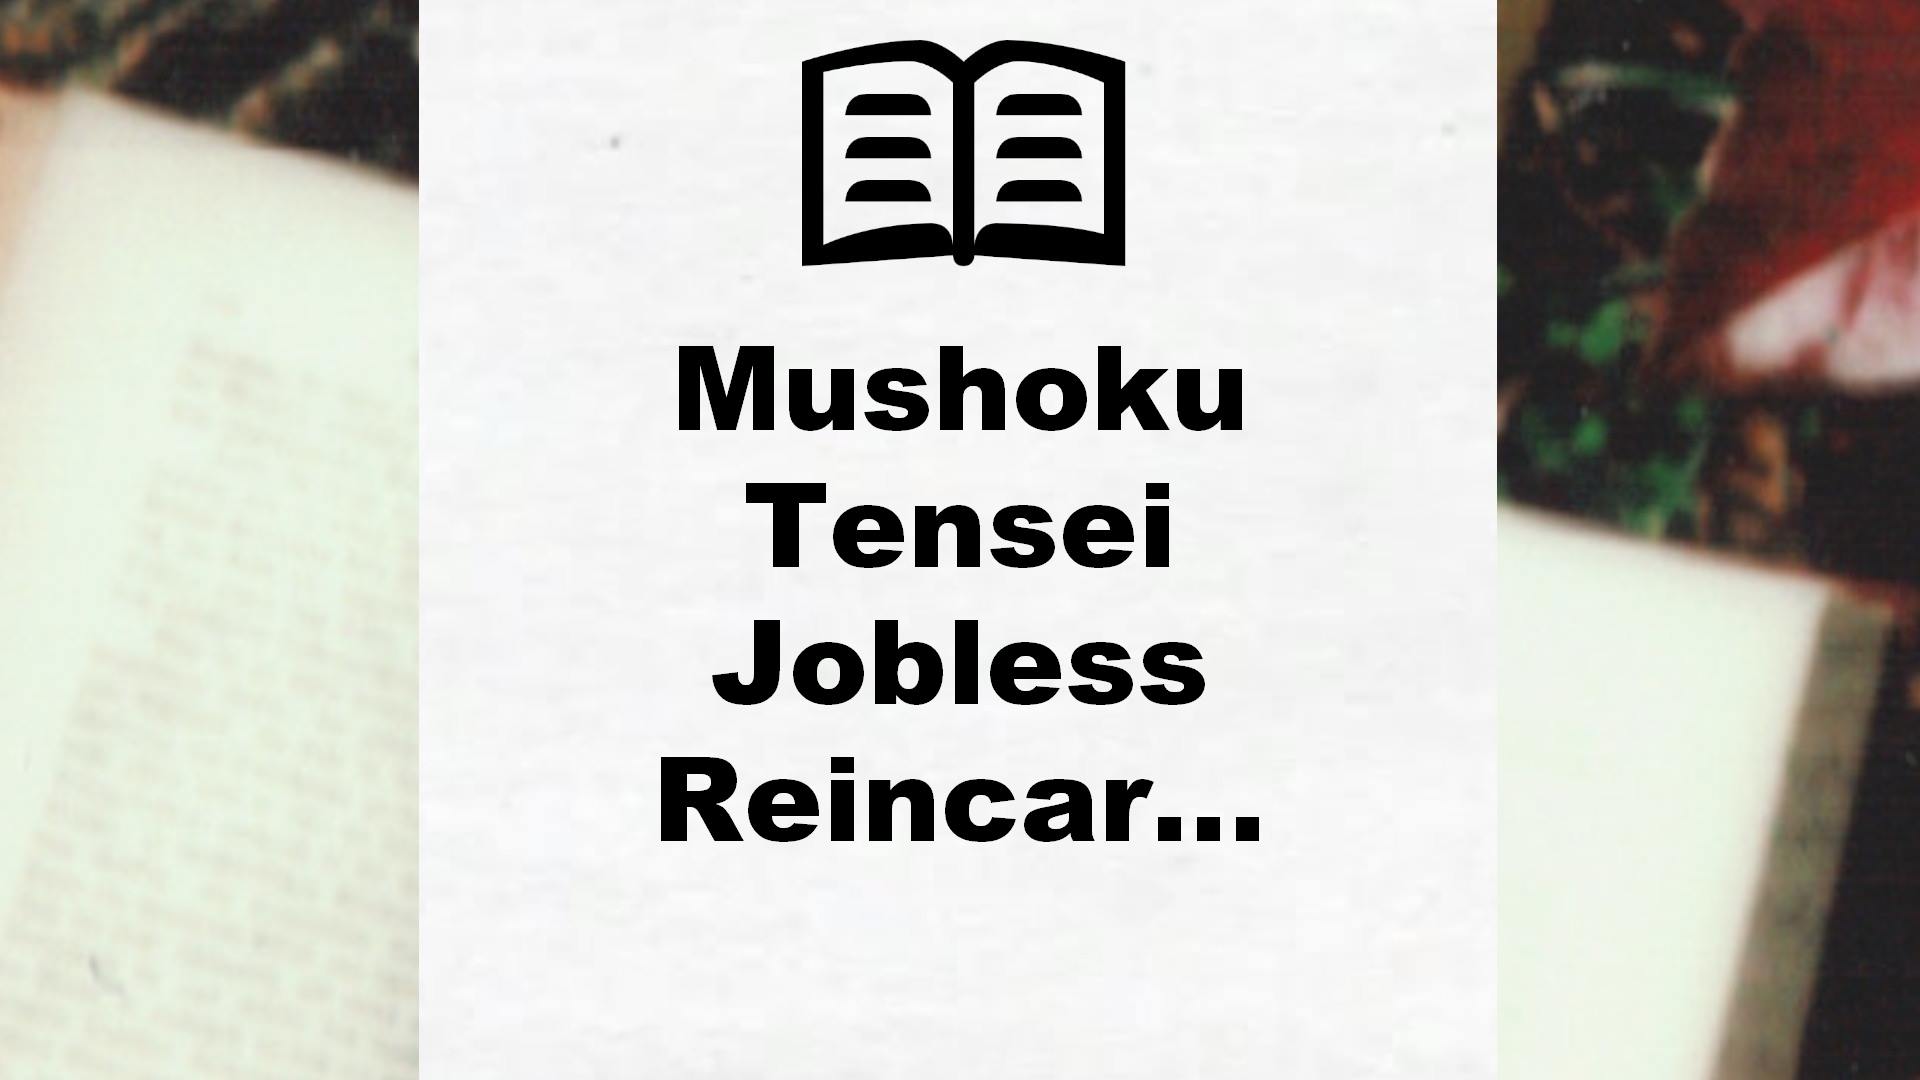 Mushoku Tensei Jobless Reincar… – Critique